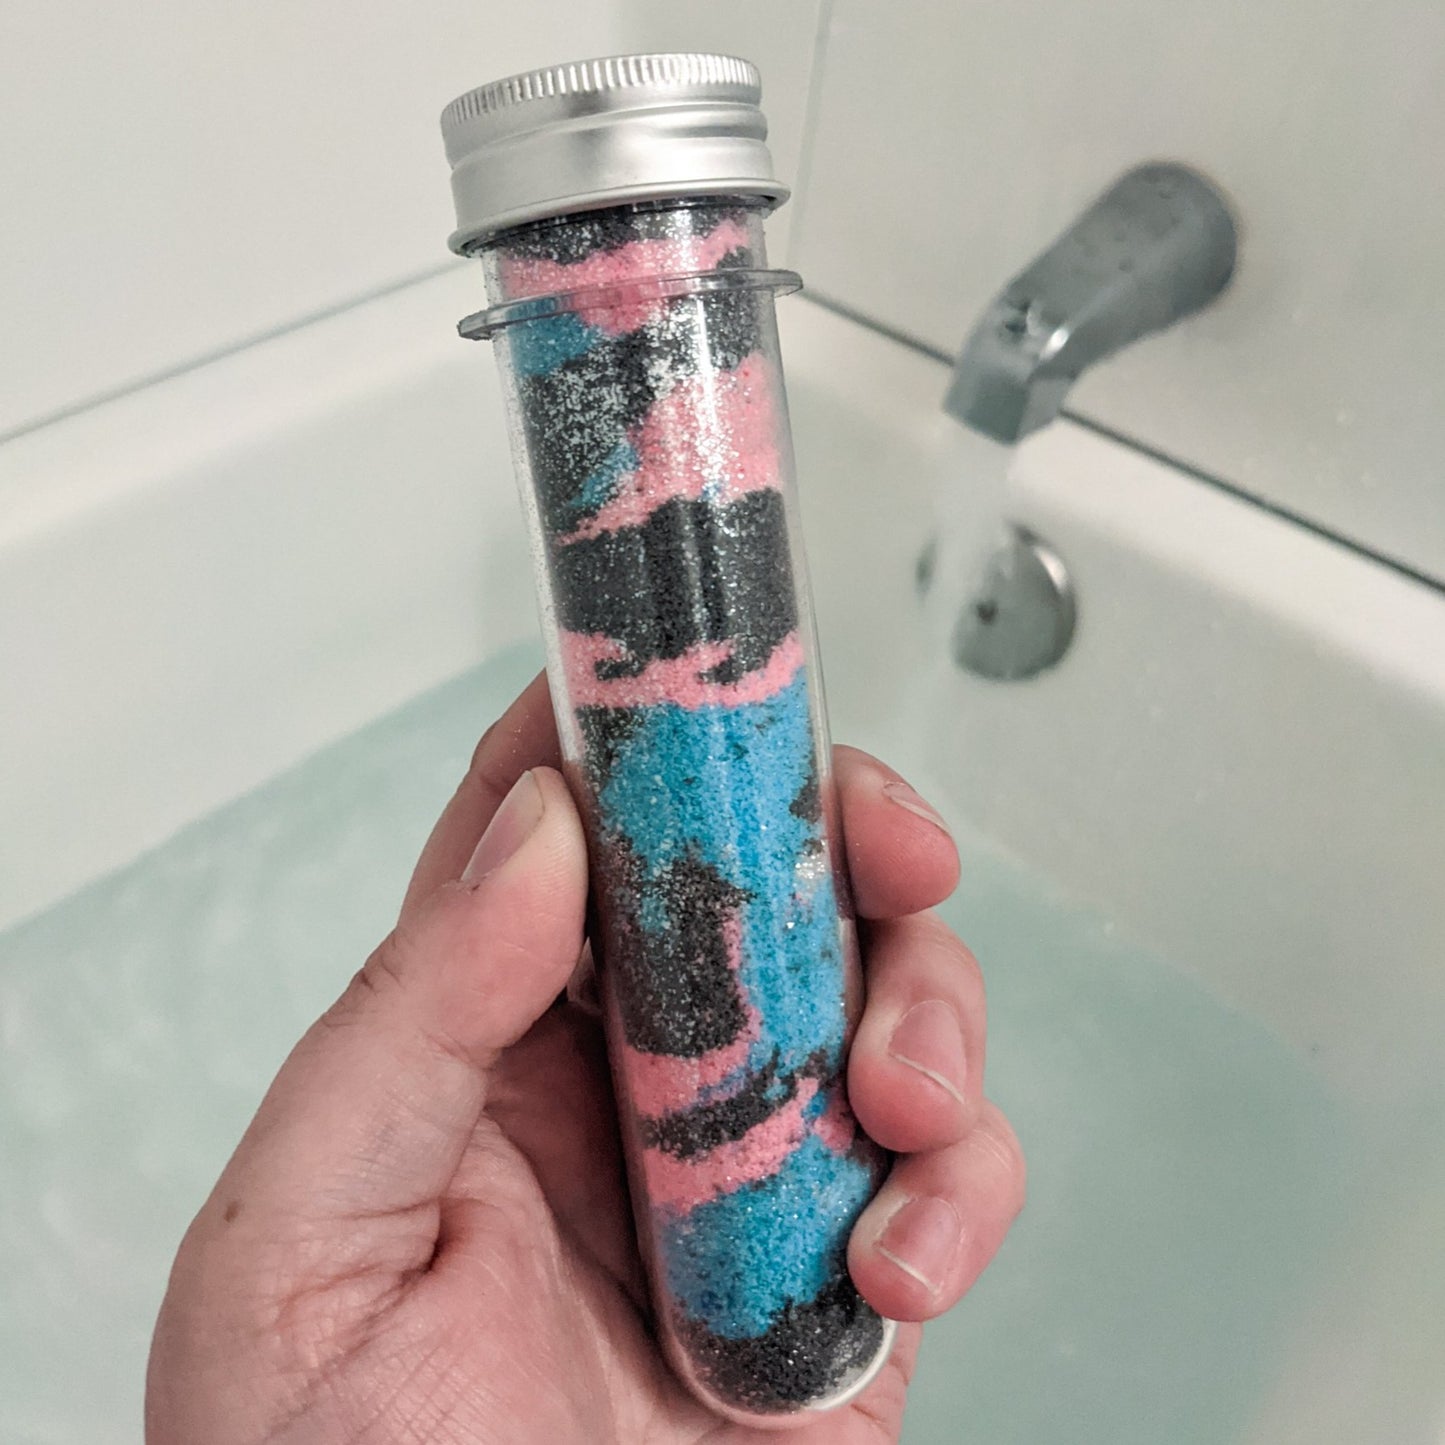 Test Tube bath fizzy